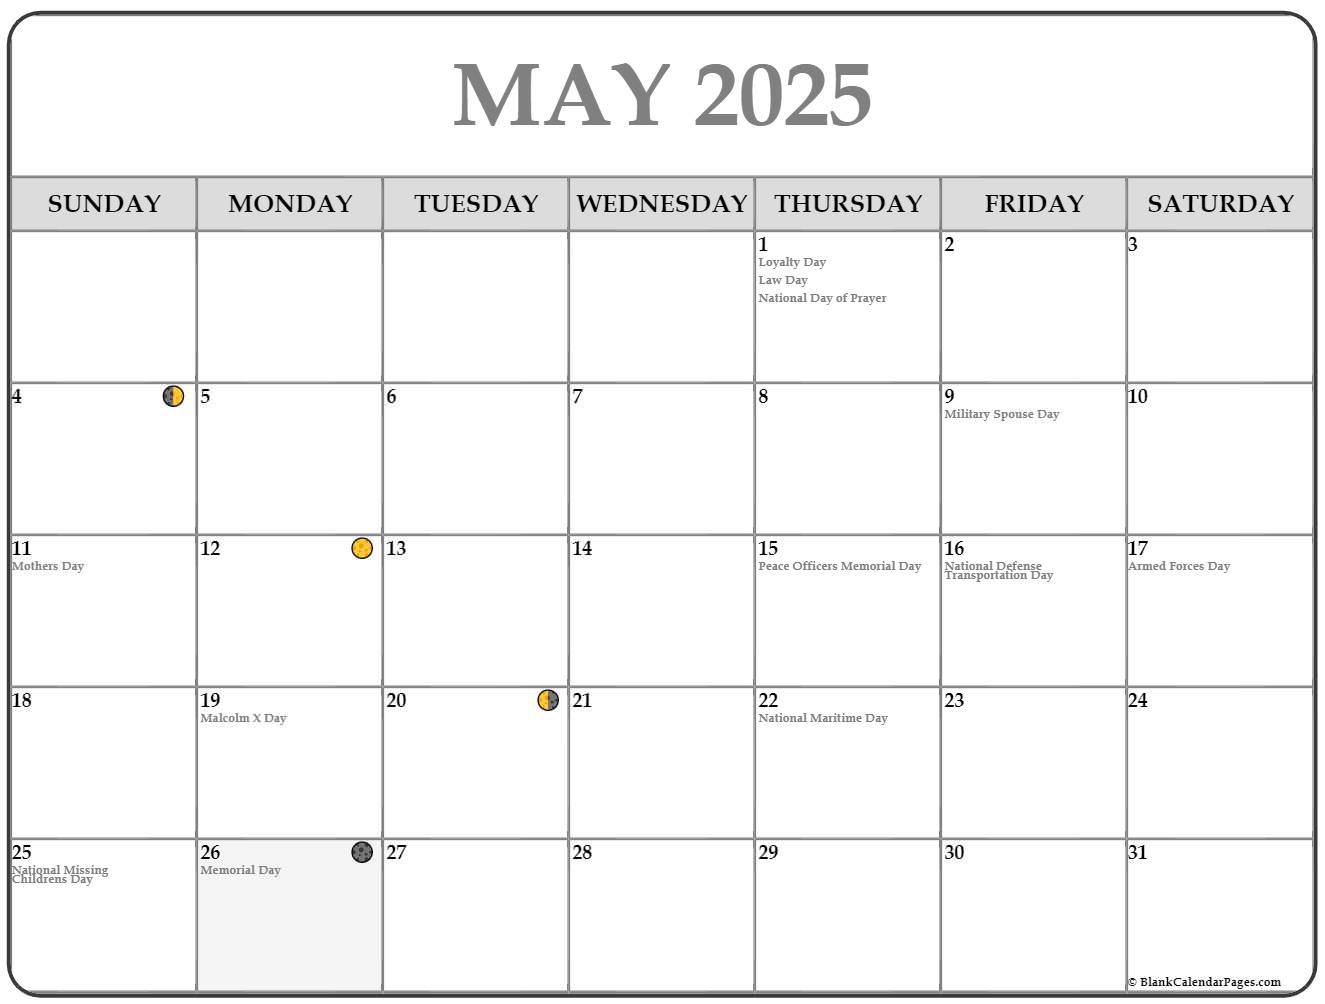 remarkable-2020-calendar-with-moon-phases-astrology-calendar